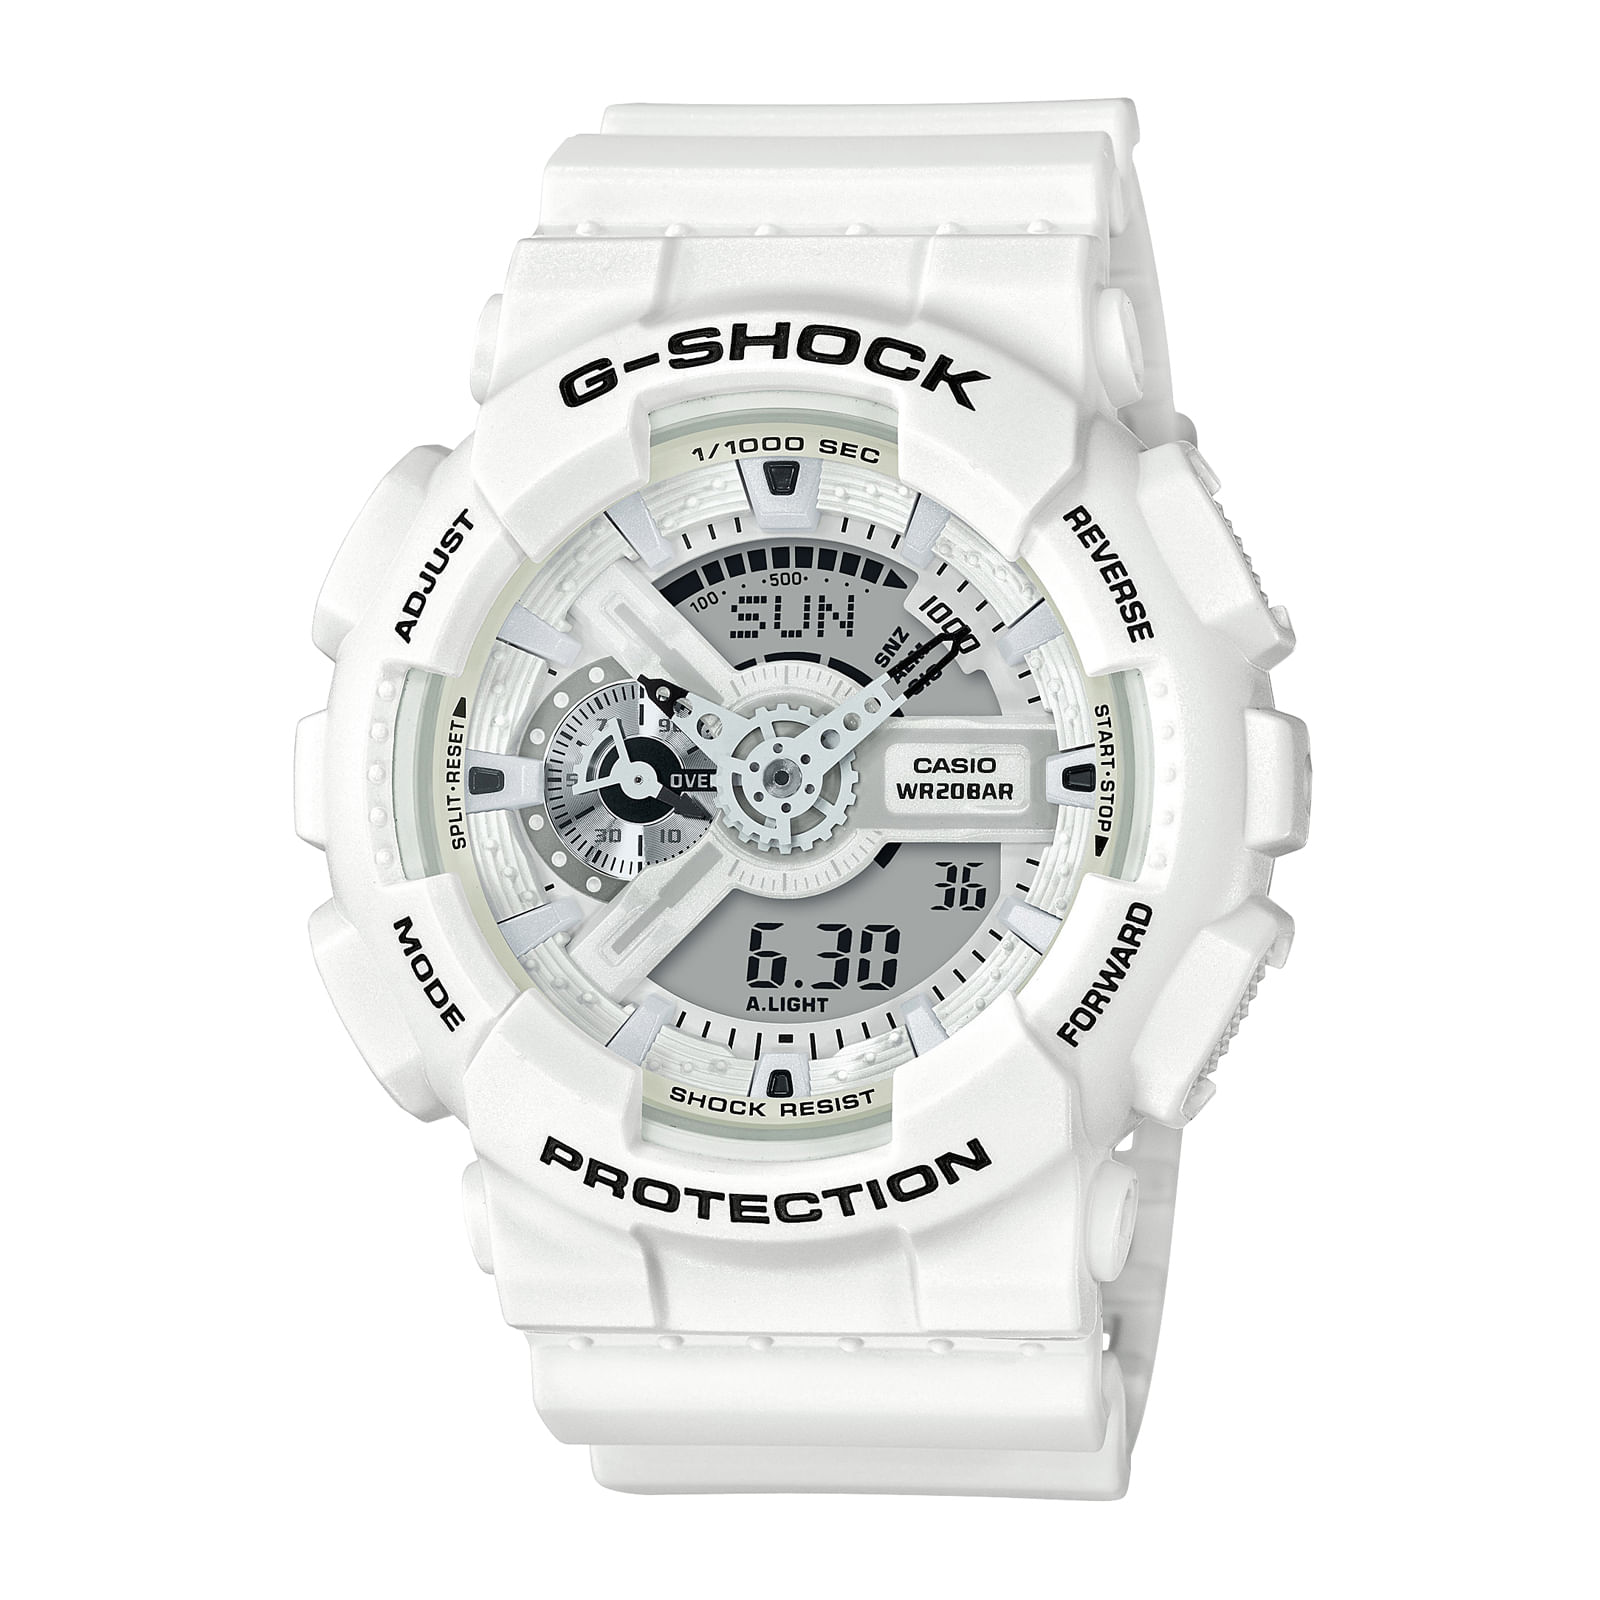 Reloj G-SHOCK GA-110MW-7A Resina Hombre Blanco